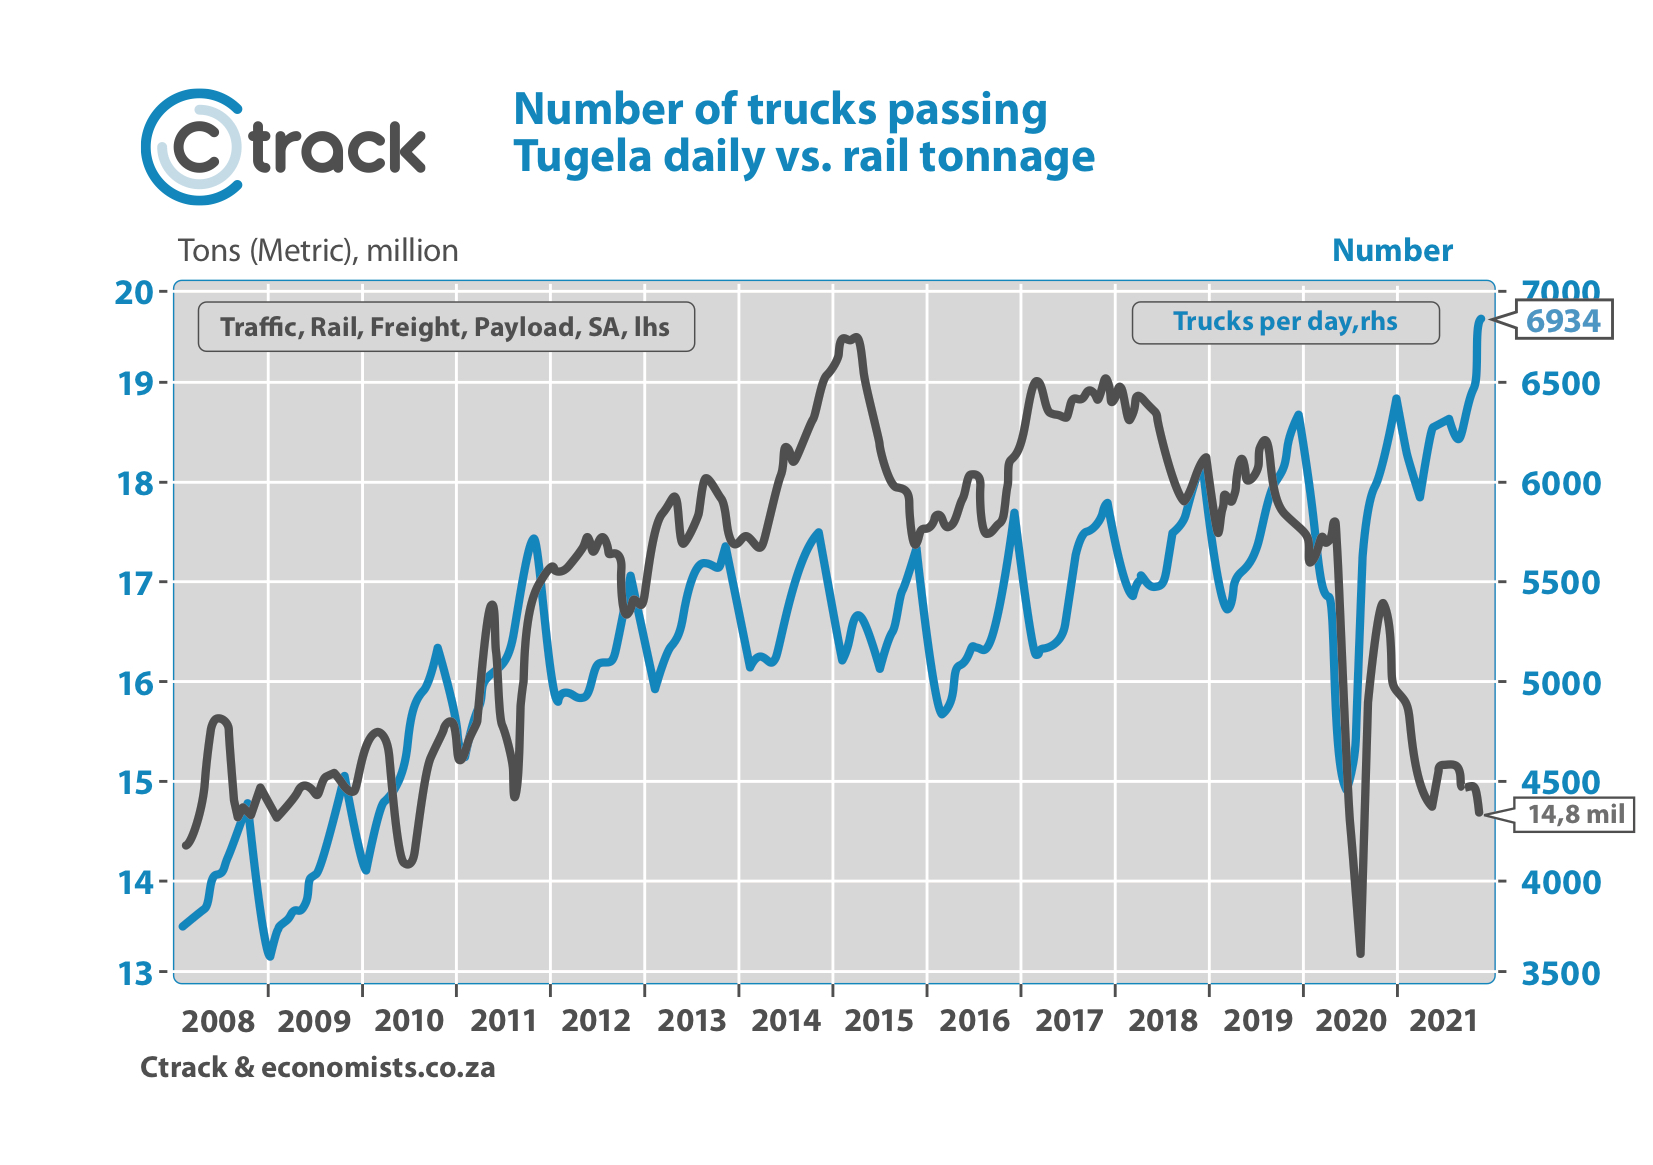  Number-of-Trucks-1-November-2021-Ctrack